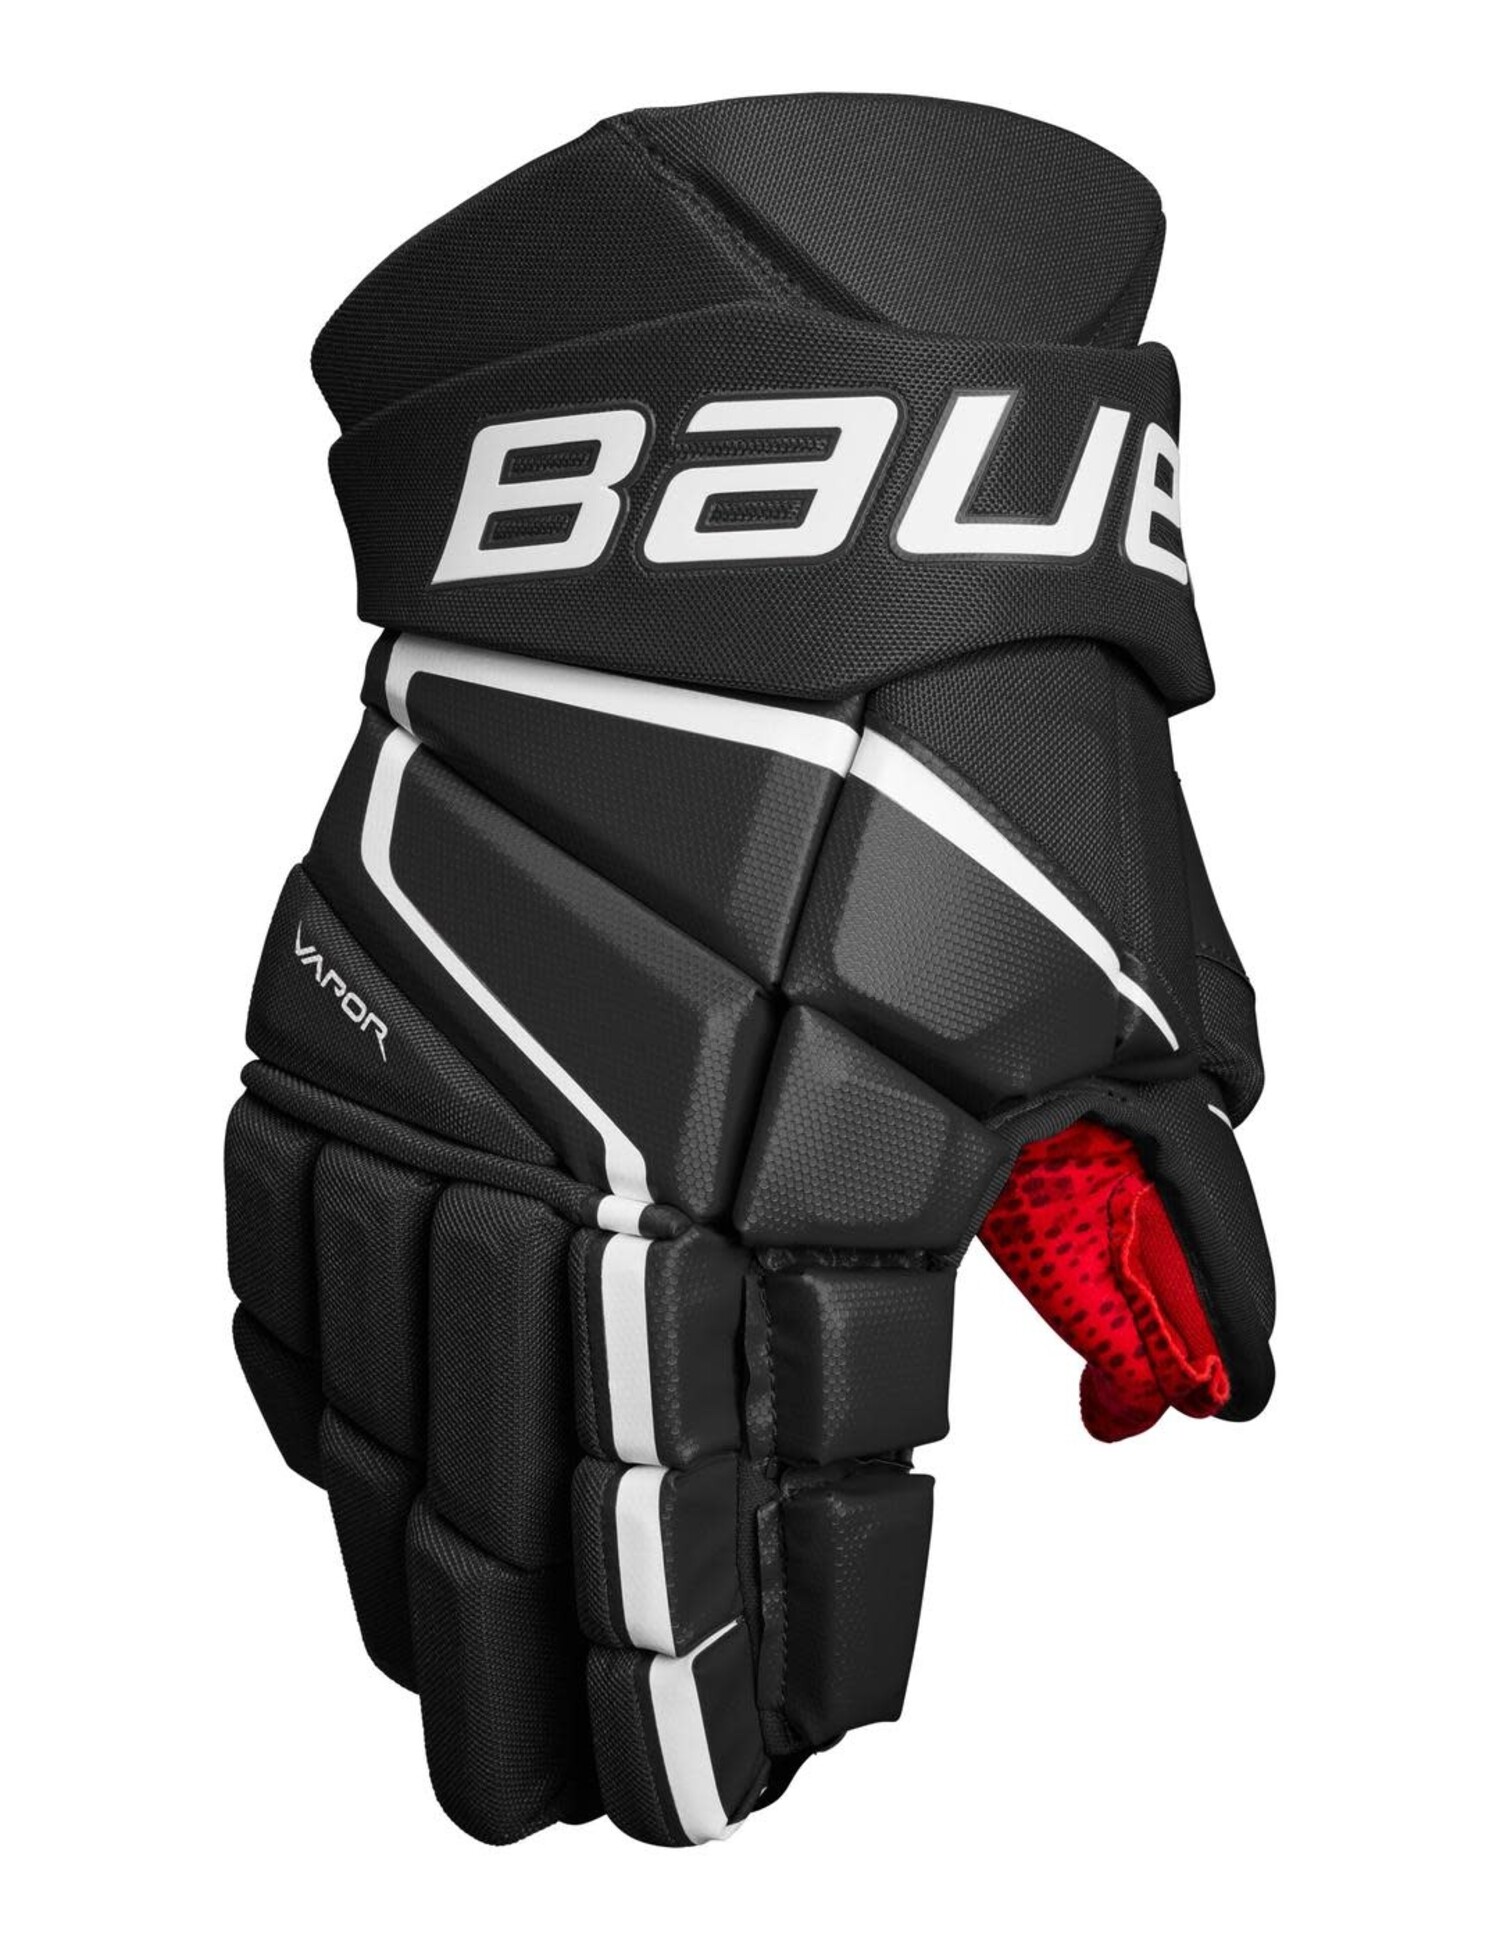 Bauer S22 Vapor 3X Hockey Shoulder Pads - Junior Sizes